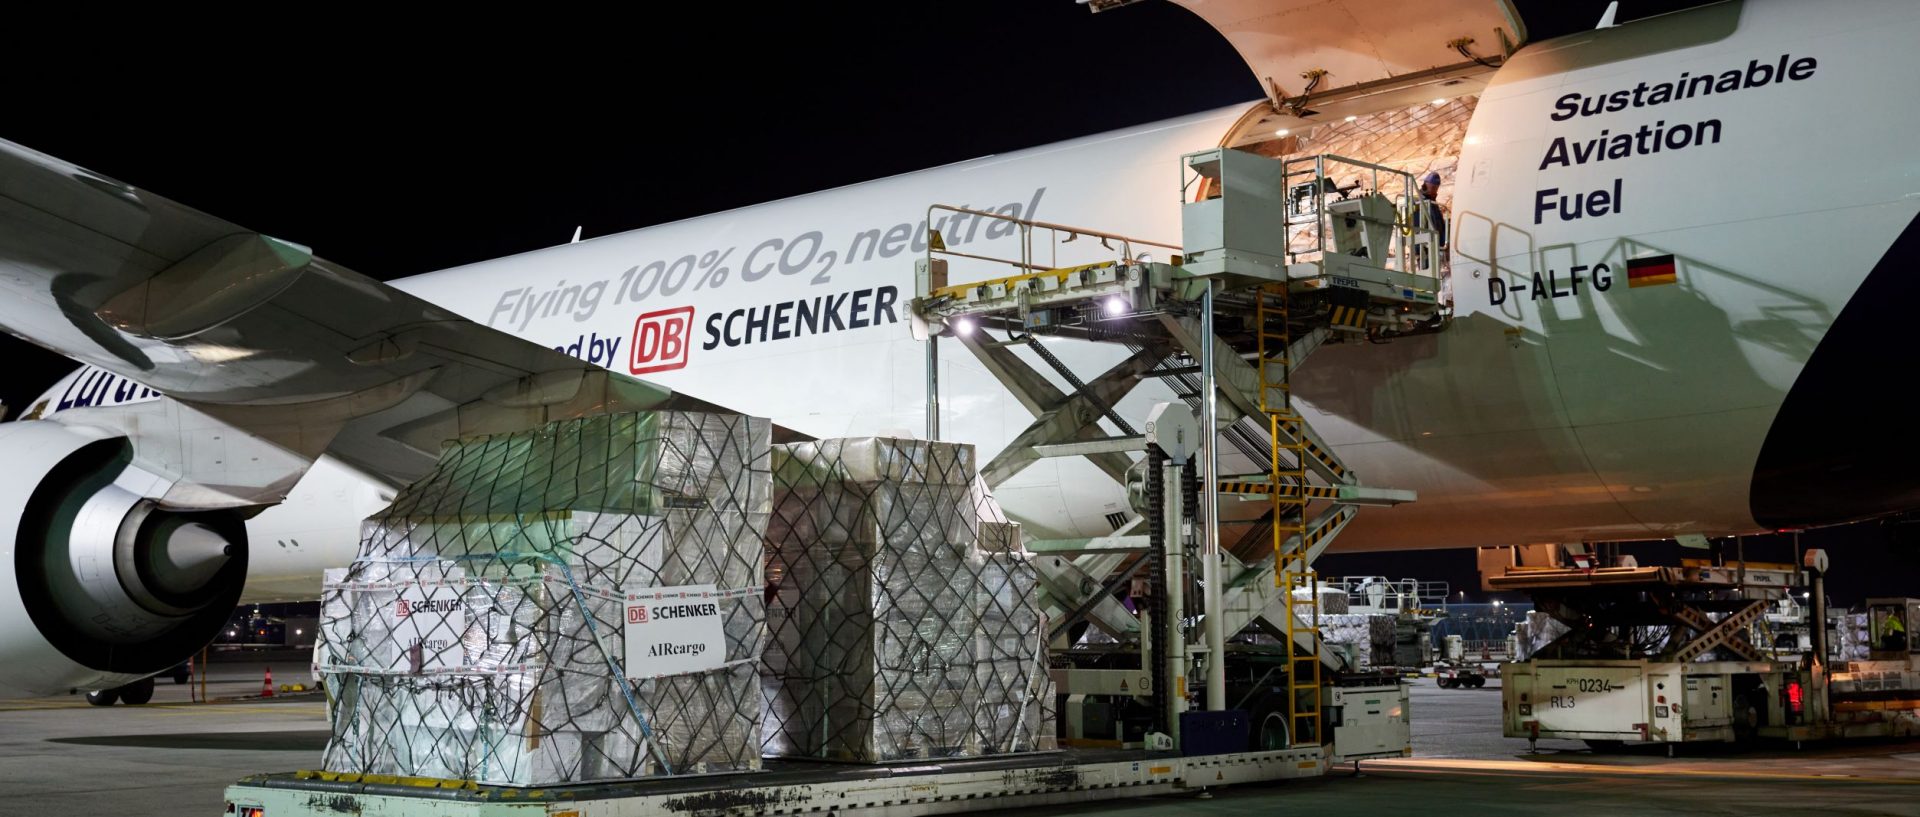 Unloading the aircraft in Frankfurt_Credit Lufthansa Cargo_Oliver Roesler